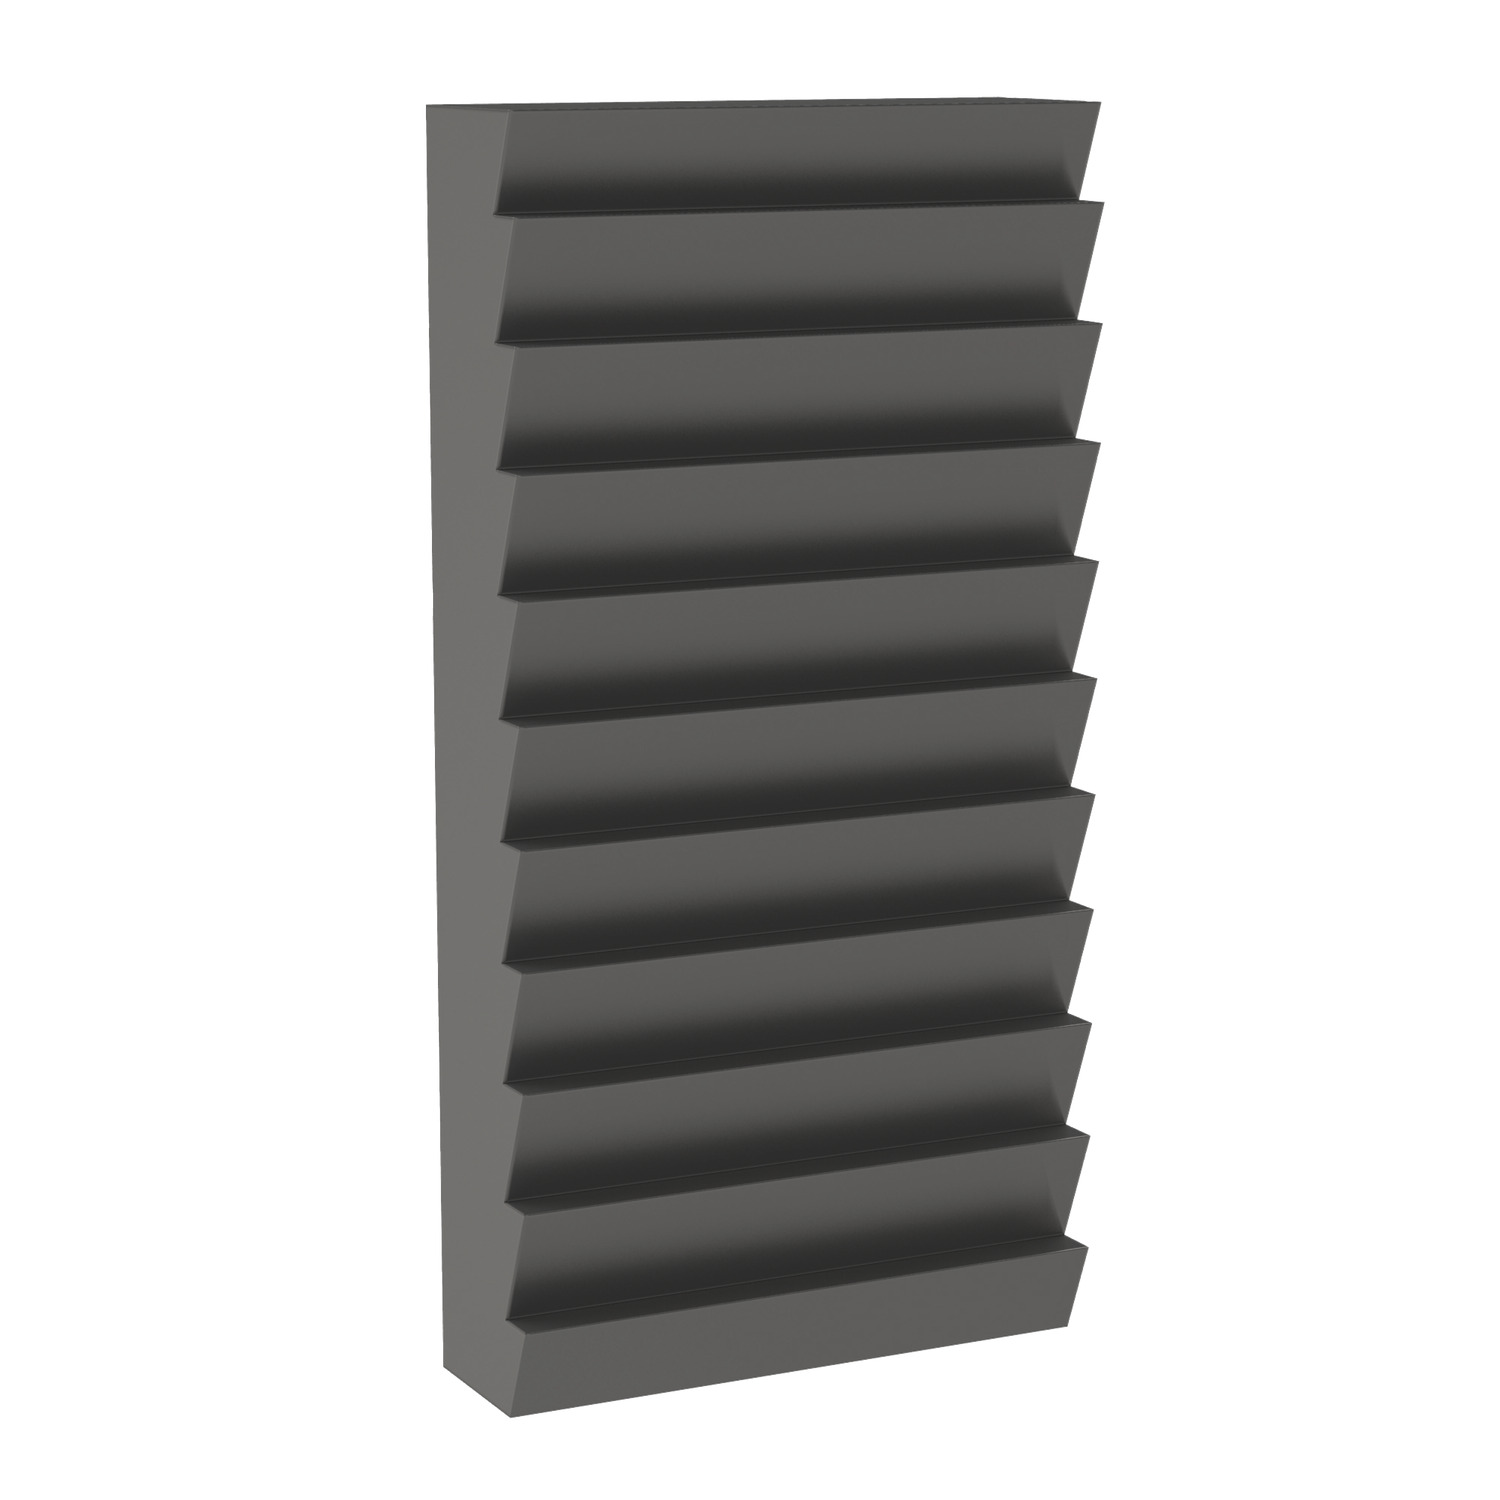 Product 35320, Gripper Pads - Carbide rectangular / 